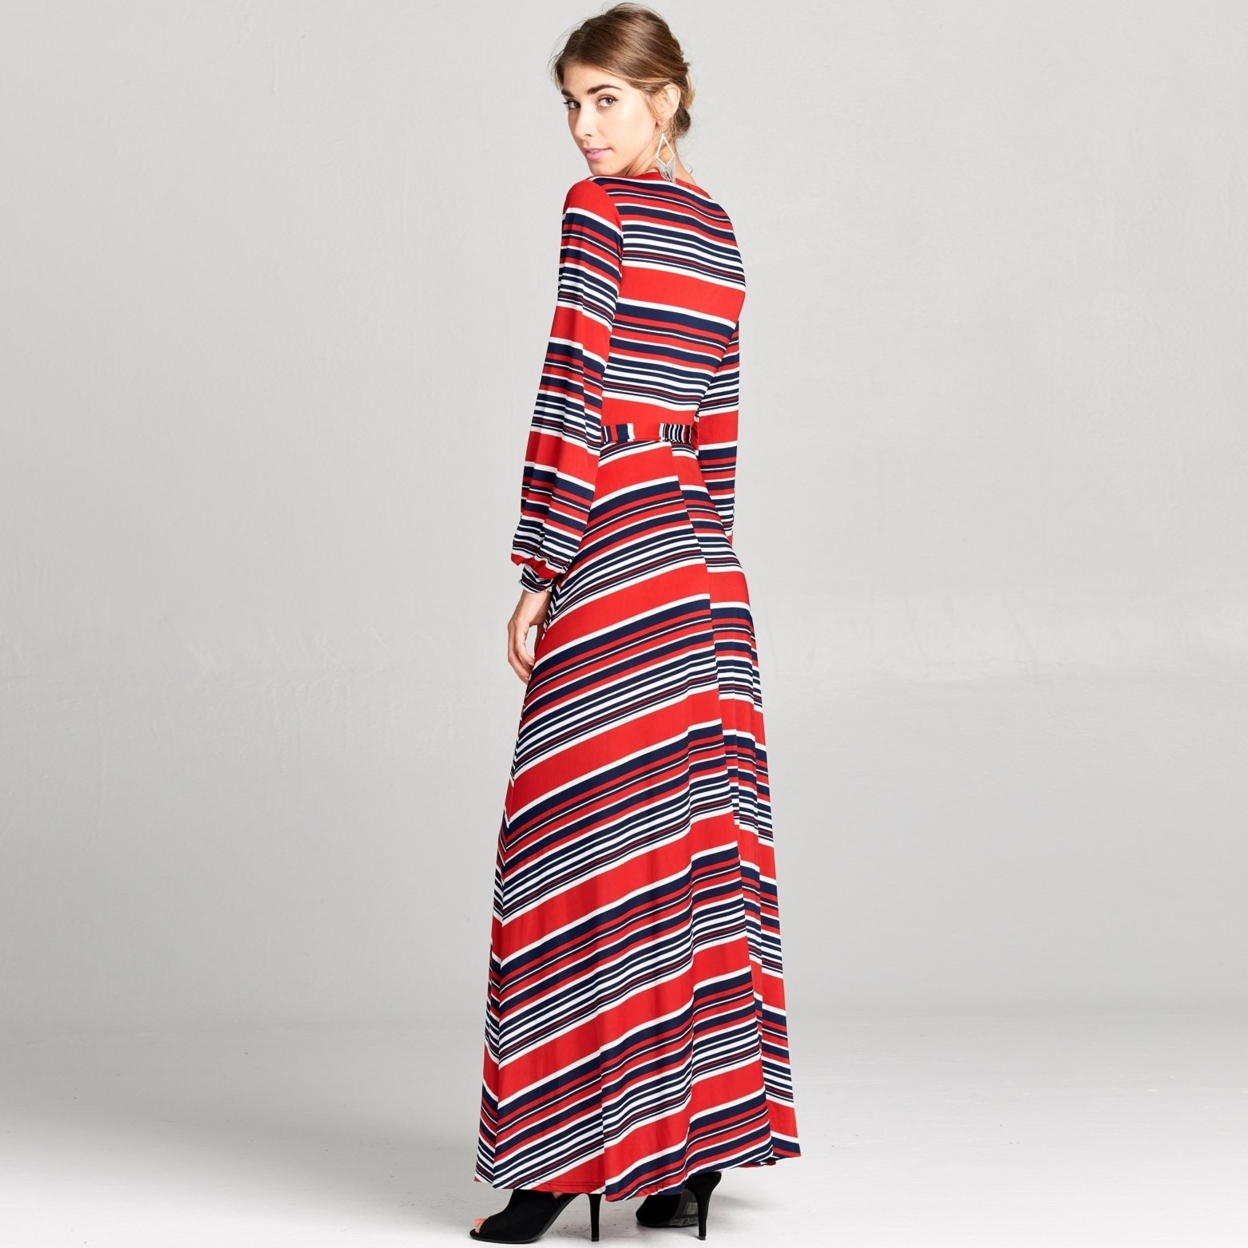 Cuffed Sleeve Venechia Stripe Dress - Mustard/navy, Small (2-6)